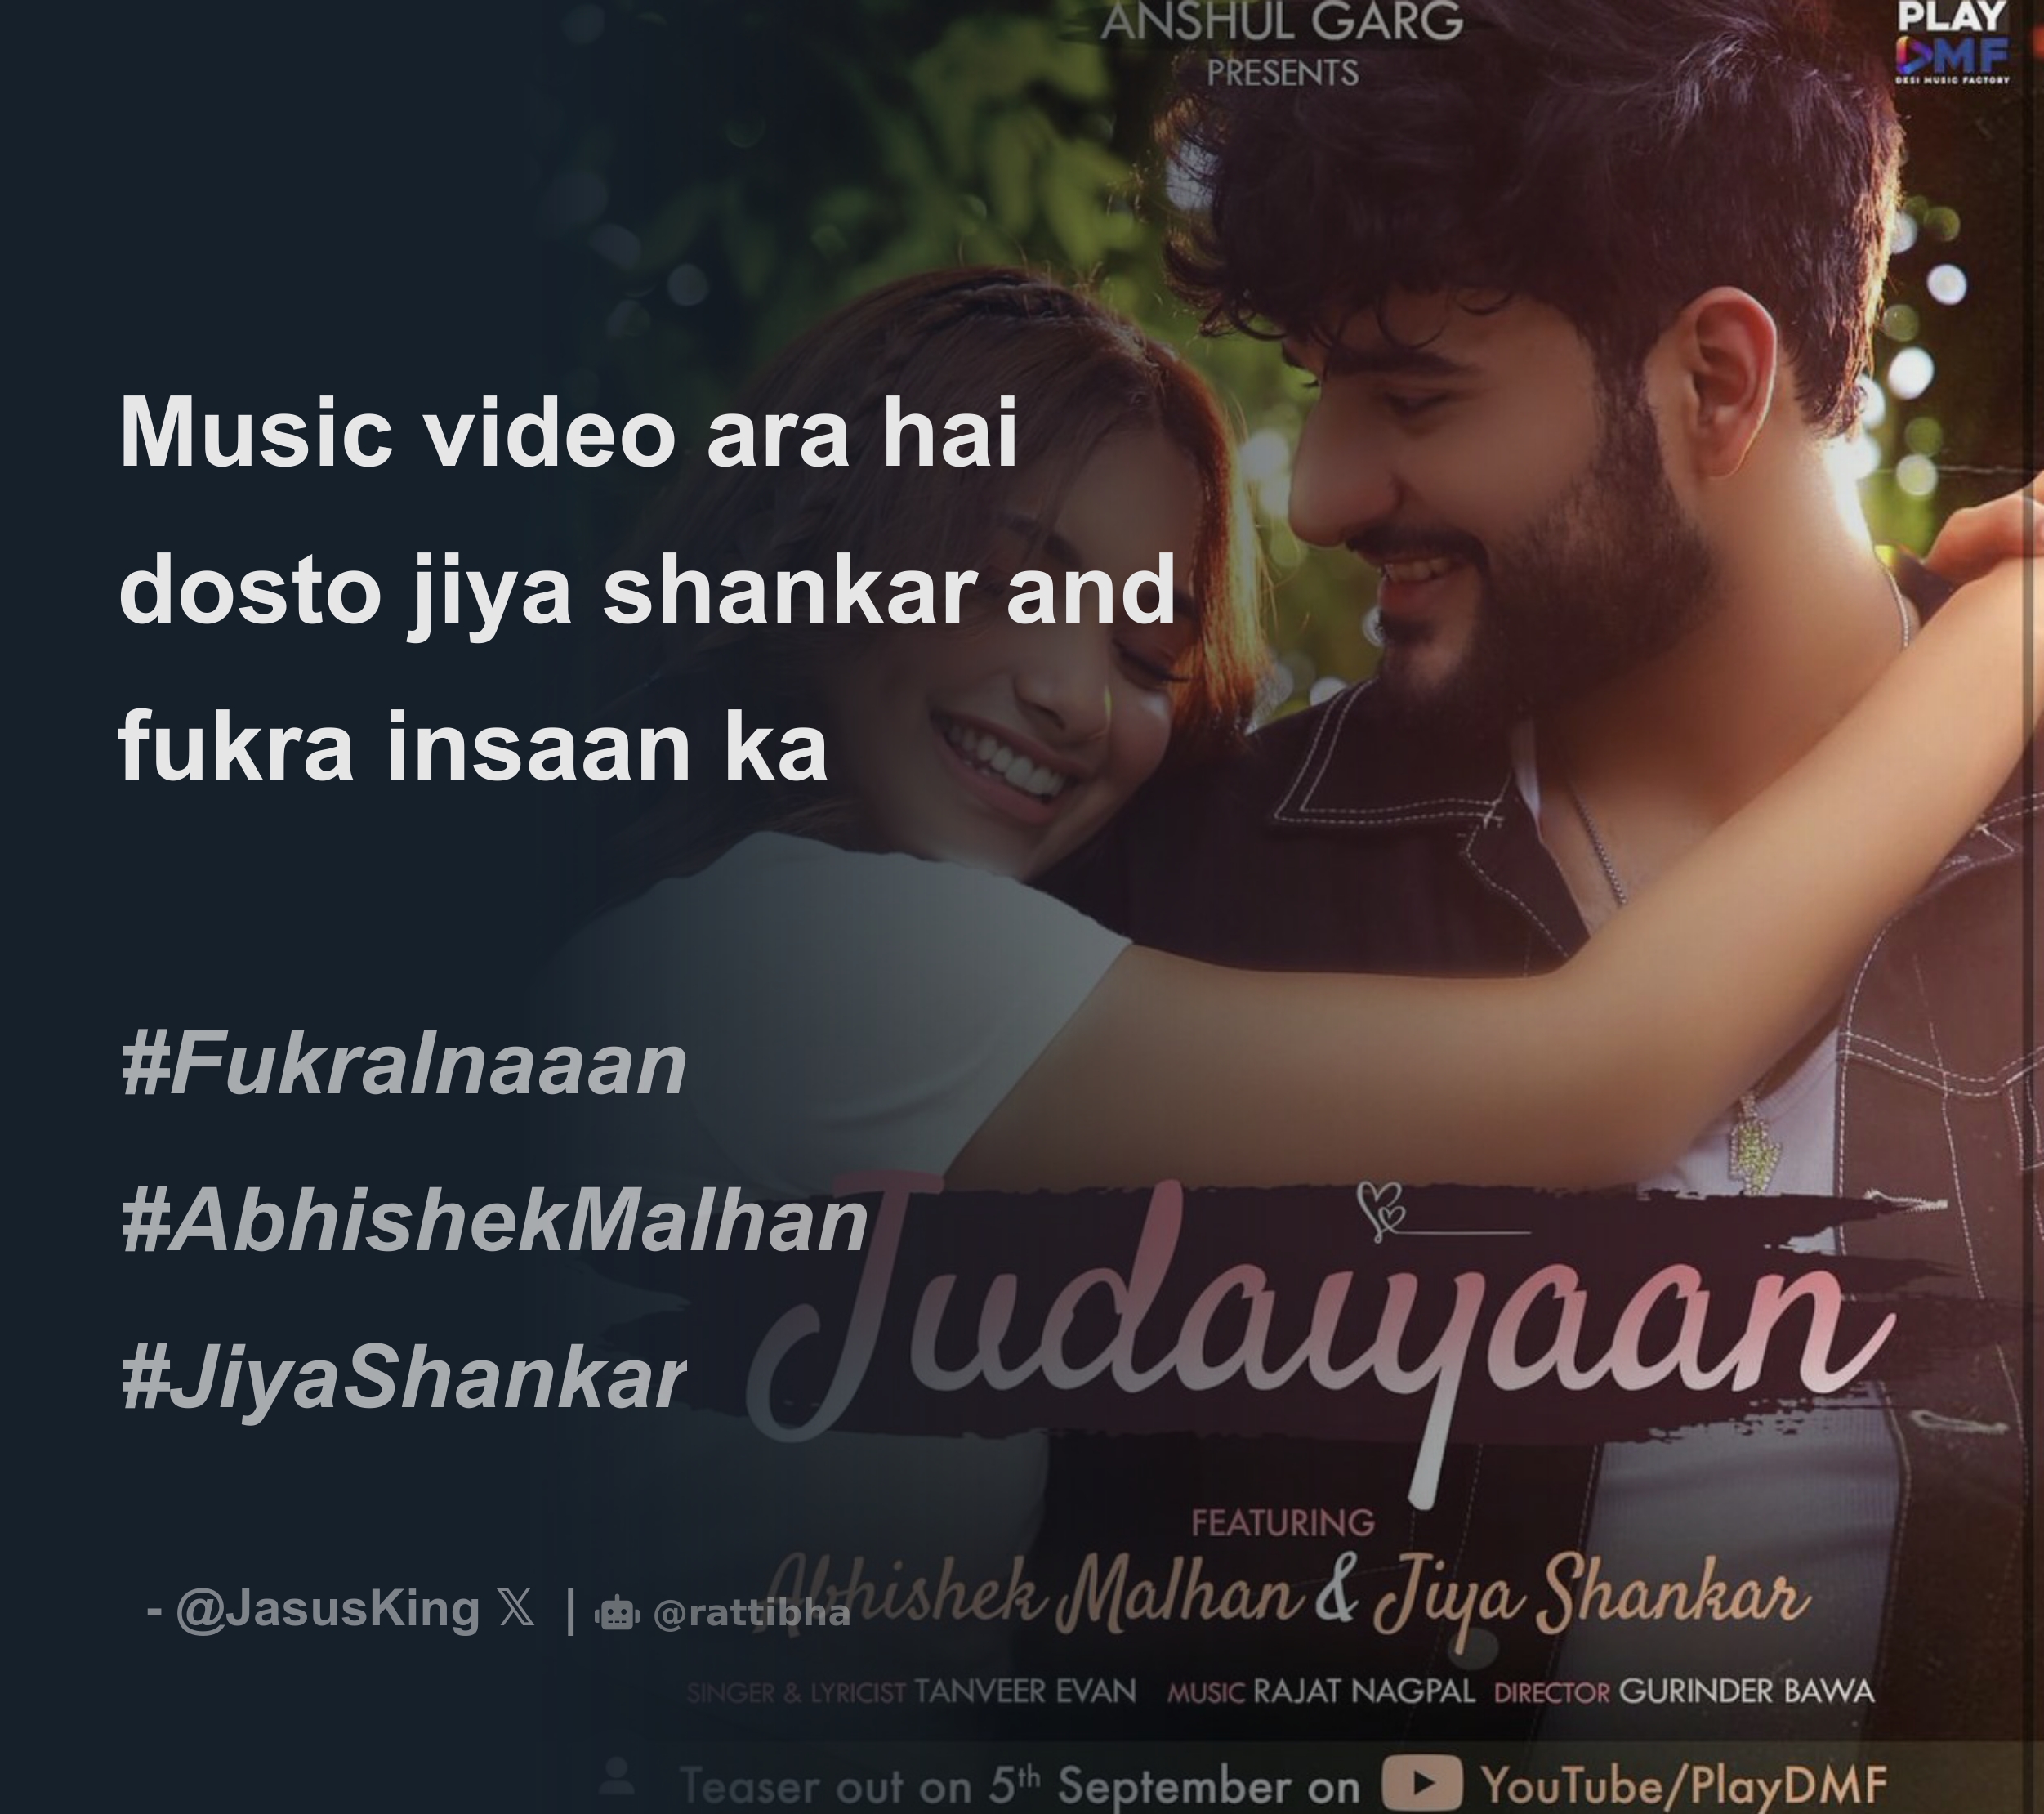 The Rajat Xxx Video - Music video ara hai dosto jiya shankar and fukra insaan ka #FukraInaaan  #AbhishekMalhan #JiyaShankar - Thread from Jasus King @JasusKing - Rattibha